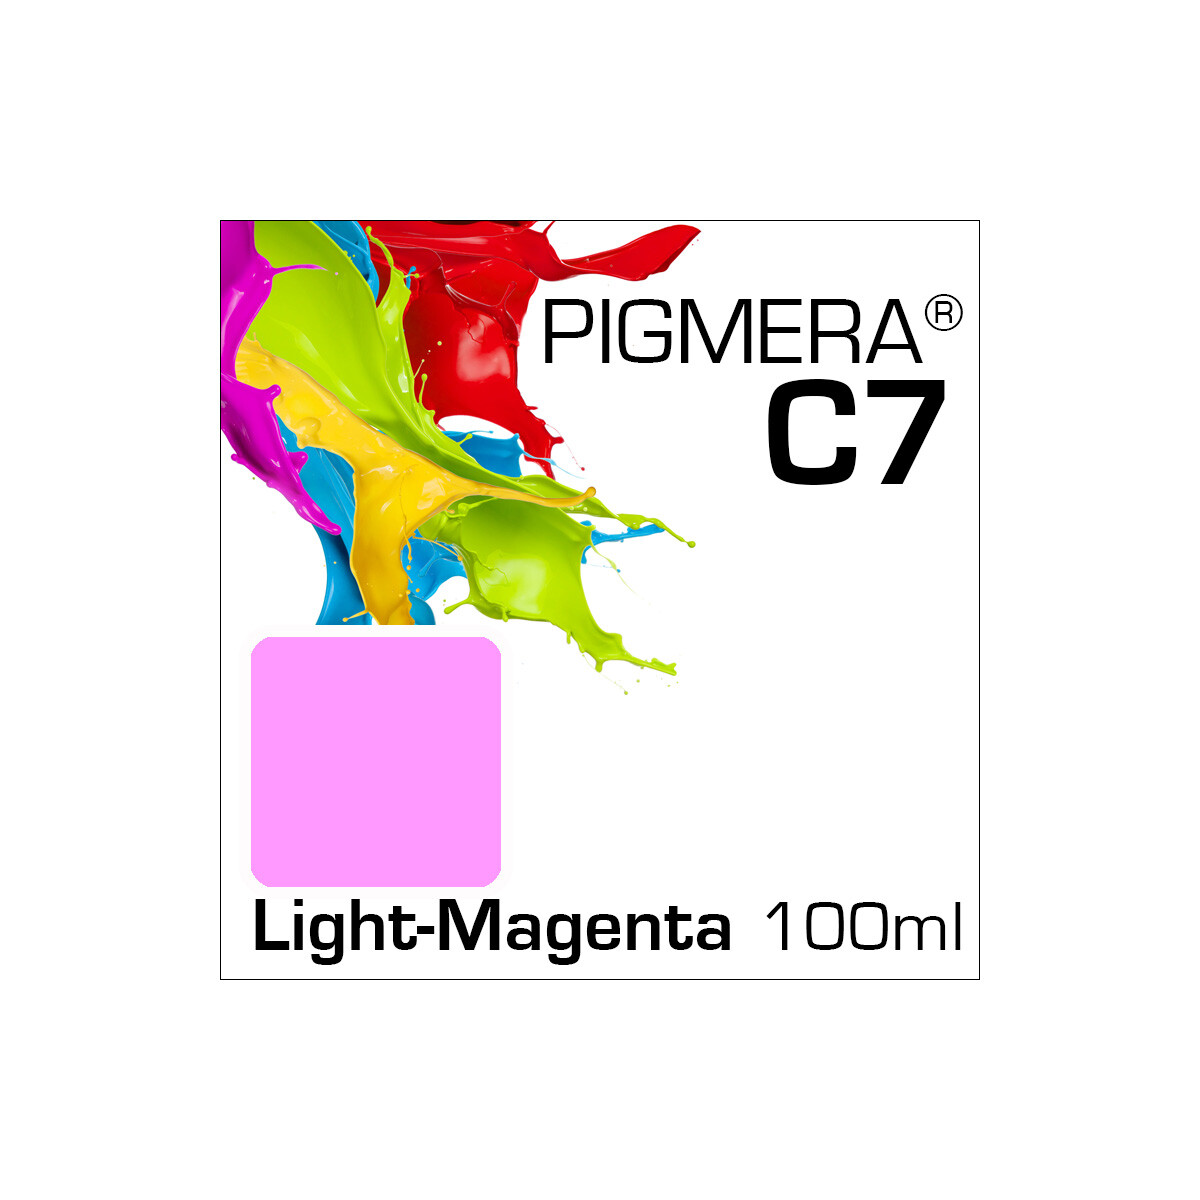 Pigmera C7 Bottle 100ml Light-Magenta (Abverkauf)